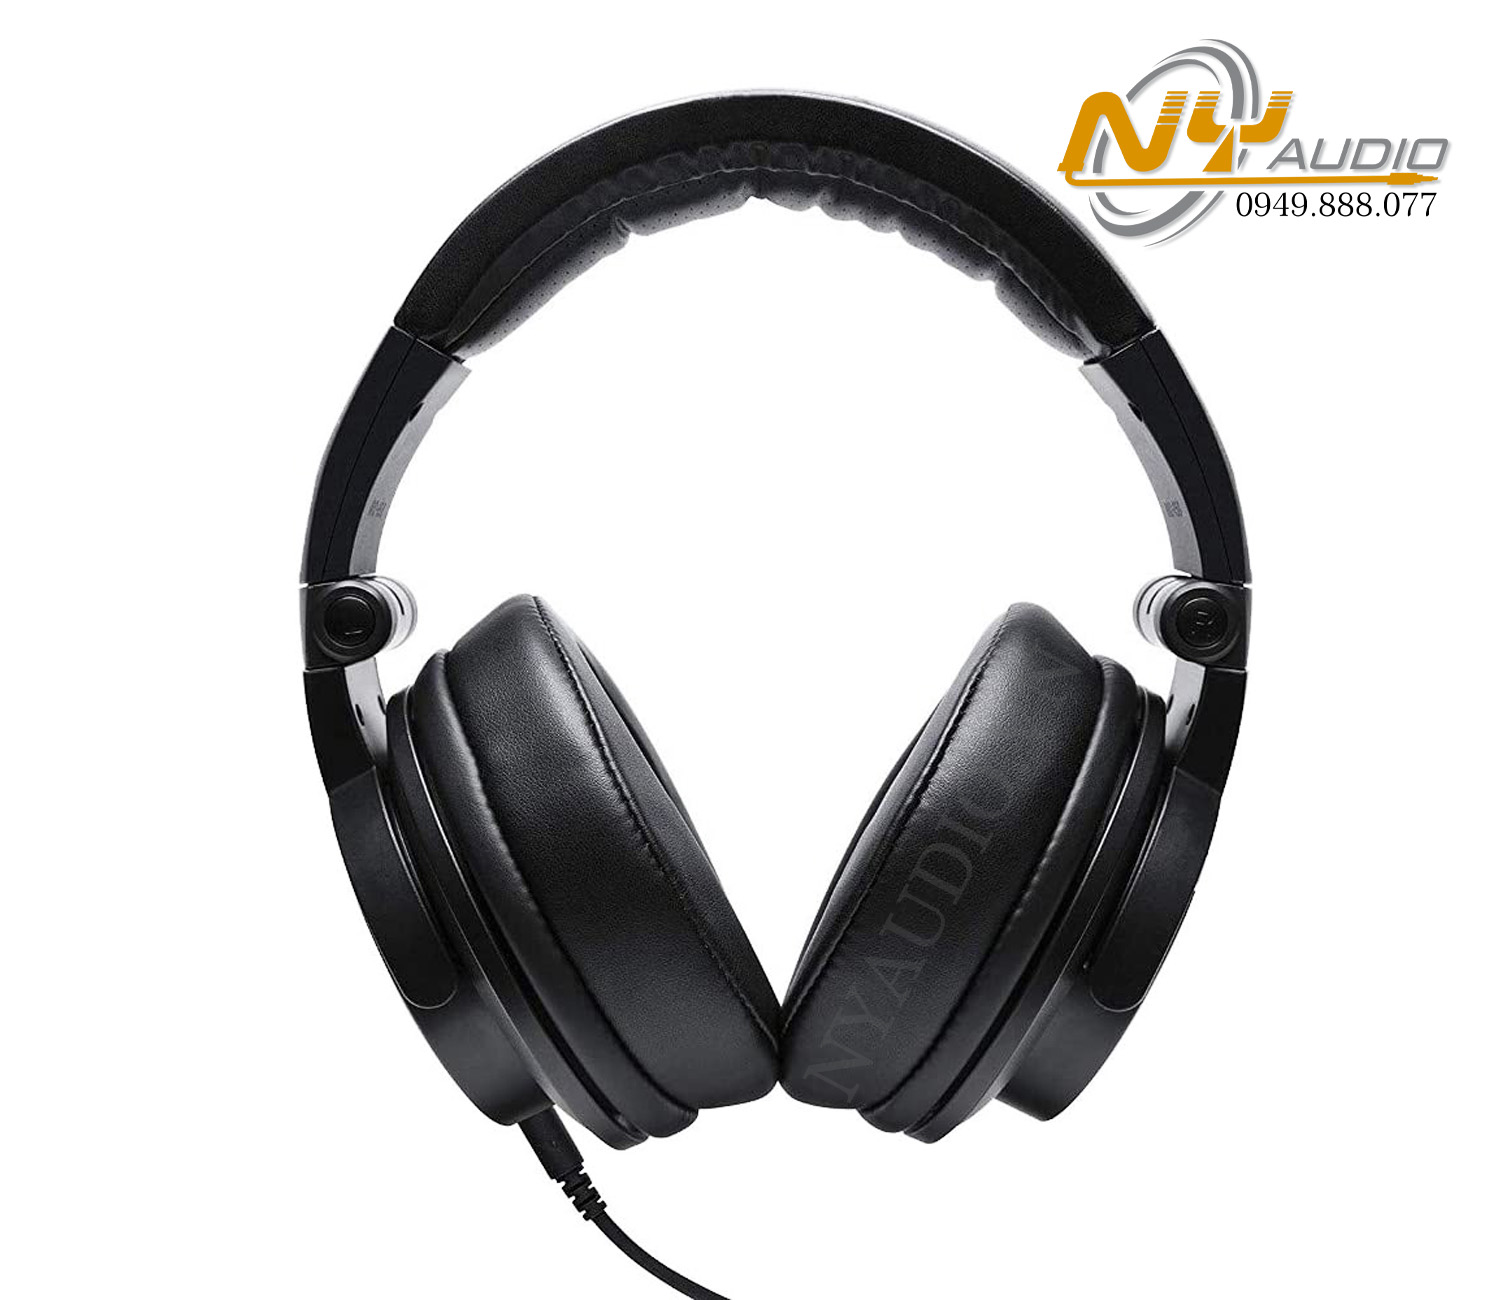 Mackie MC150 Mixing Studio headphone